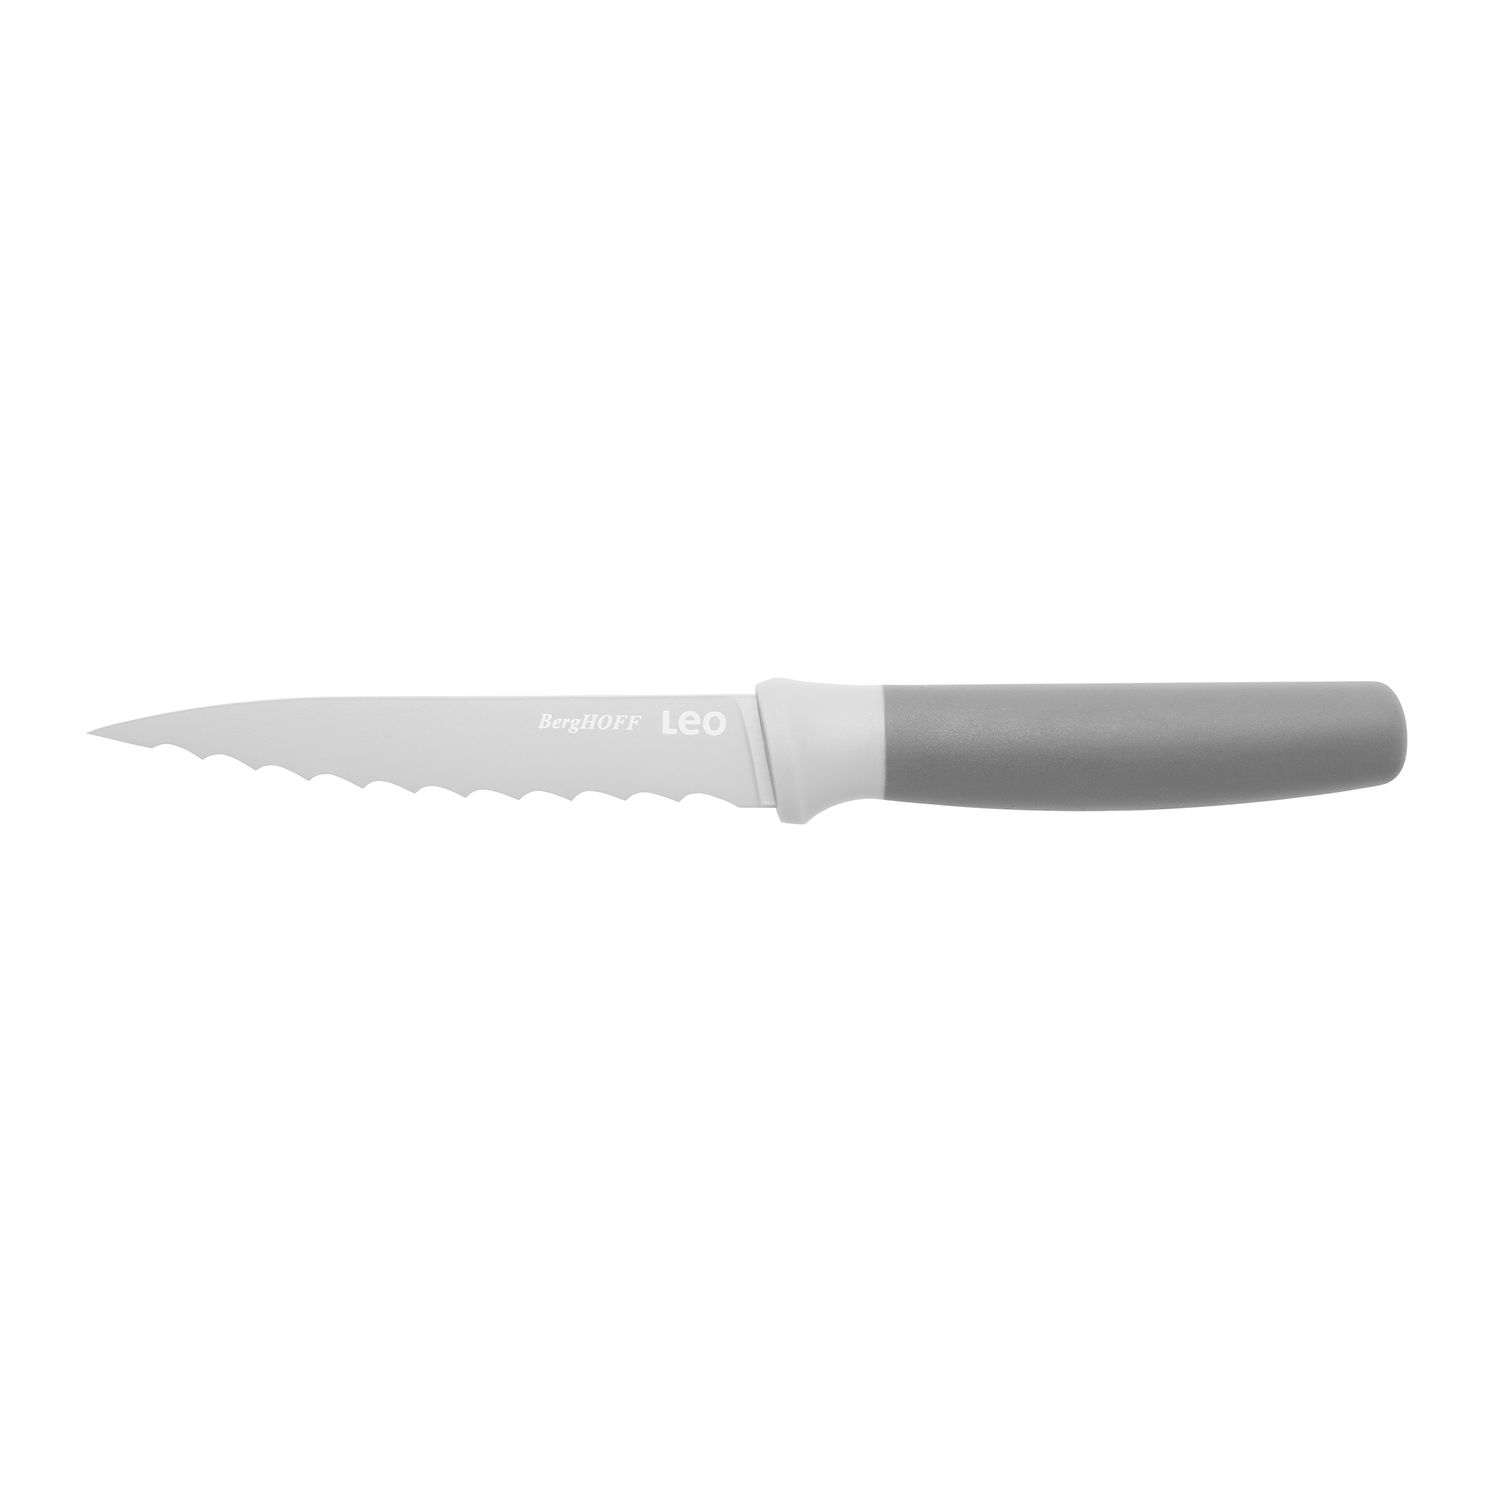 Rachael Ray 3.5 Japanese Stainless Steel Paring Knife & Sheath